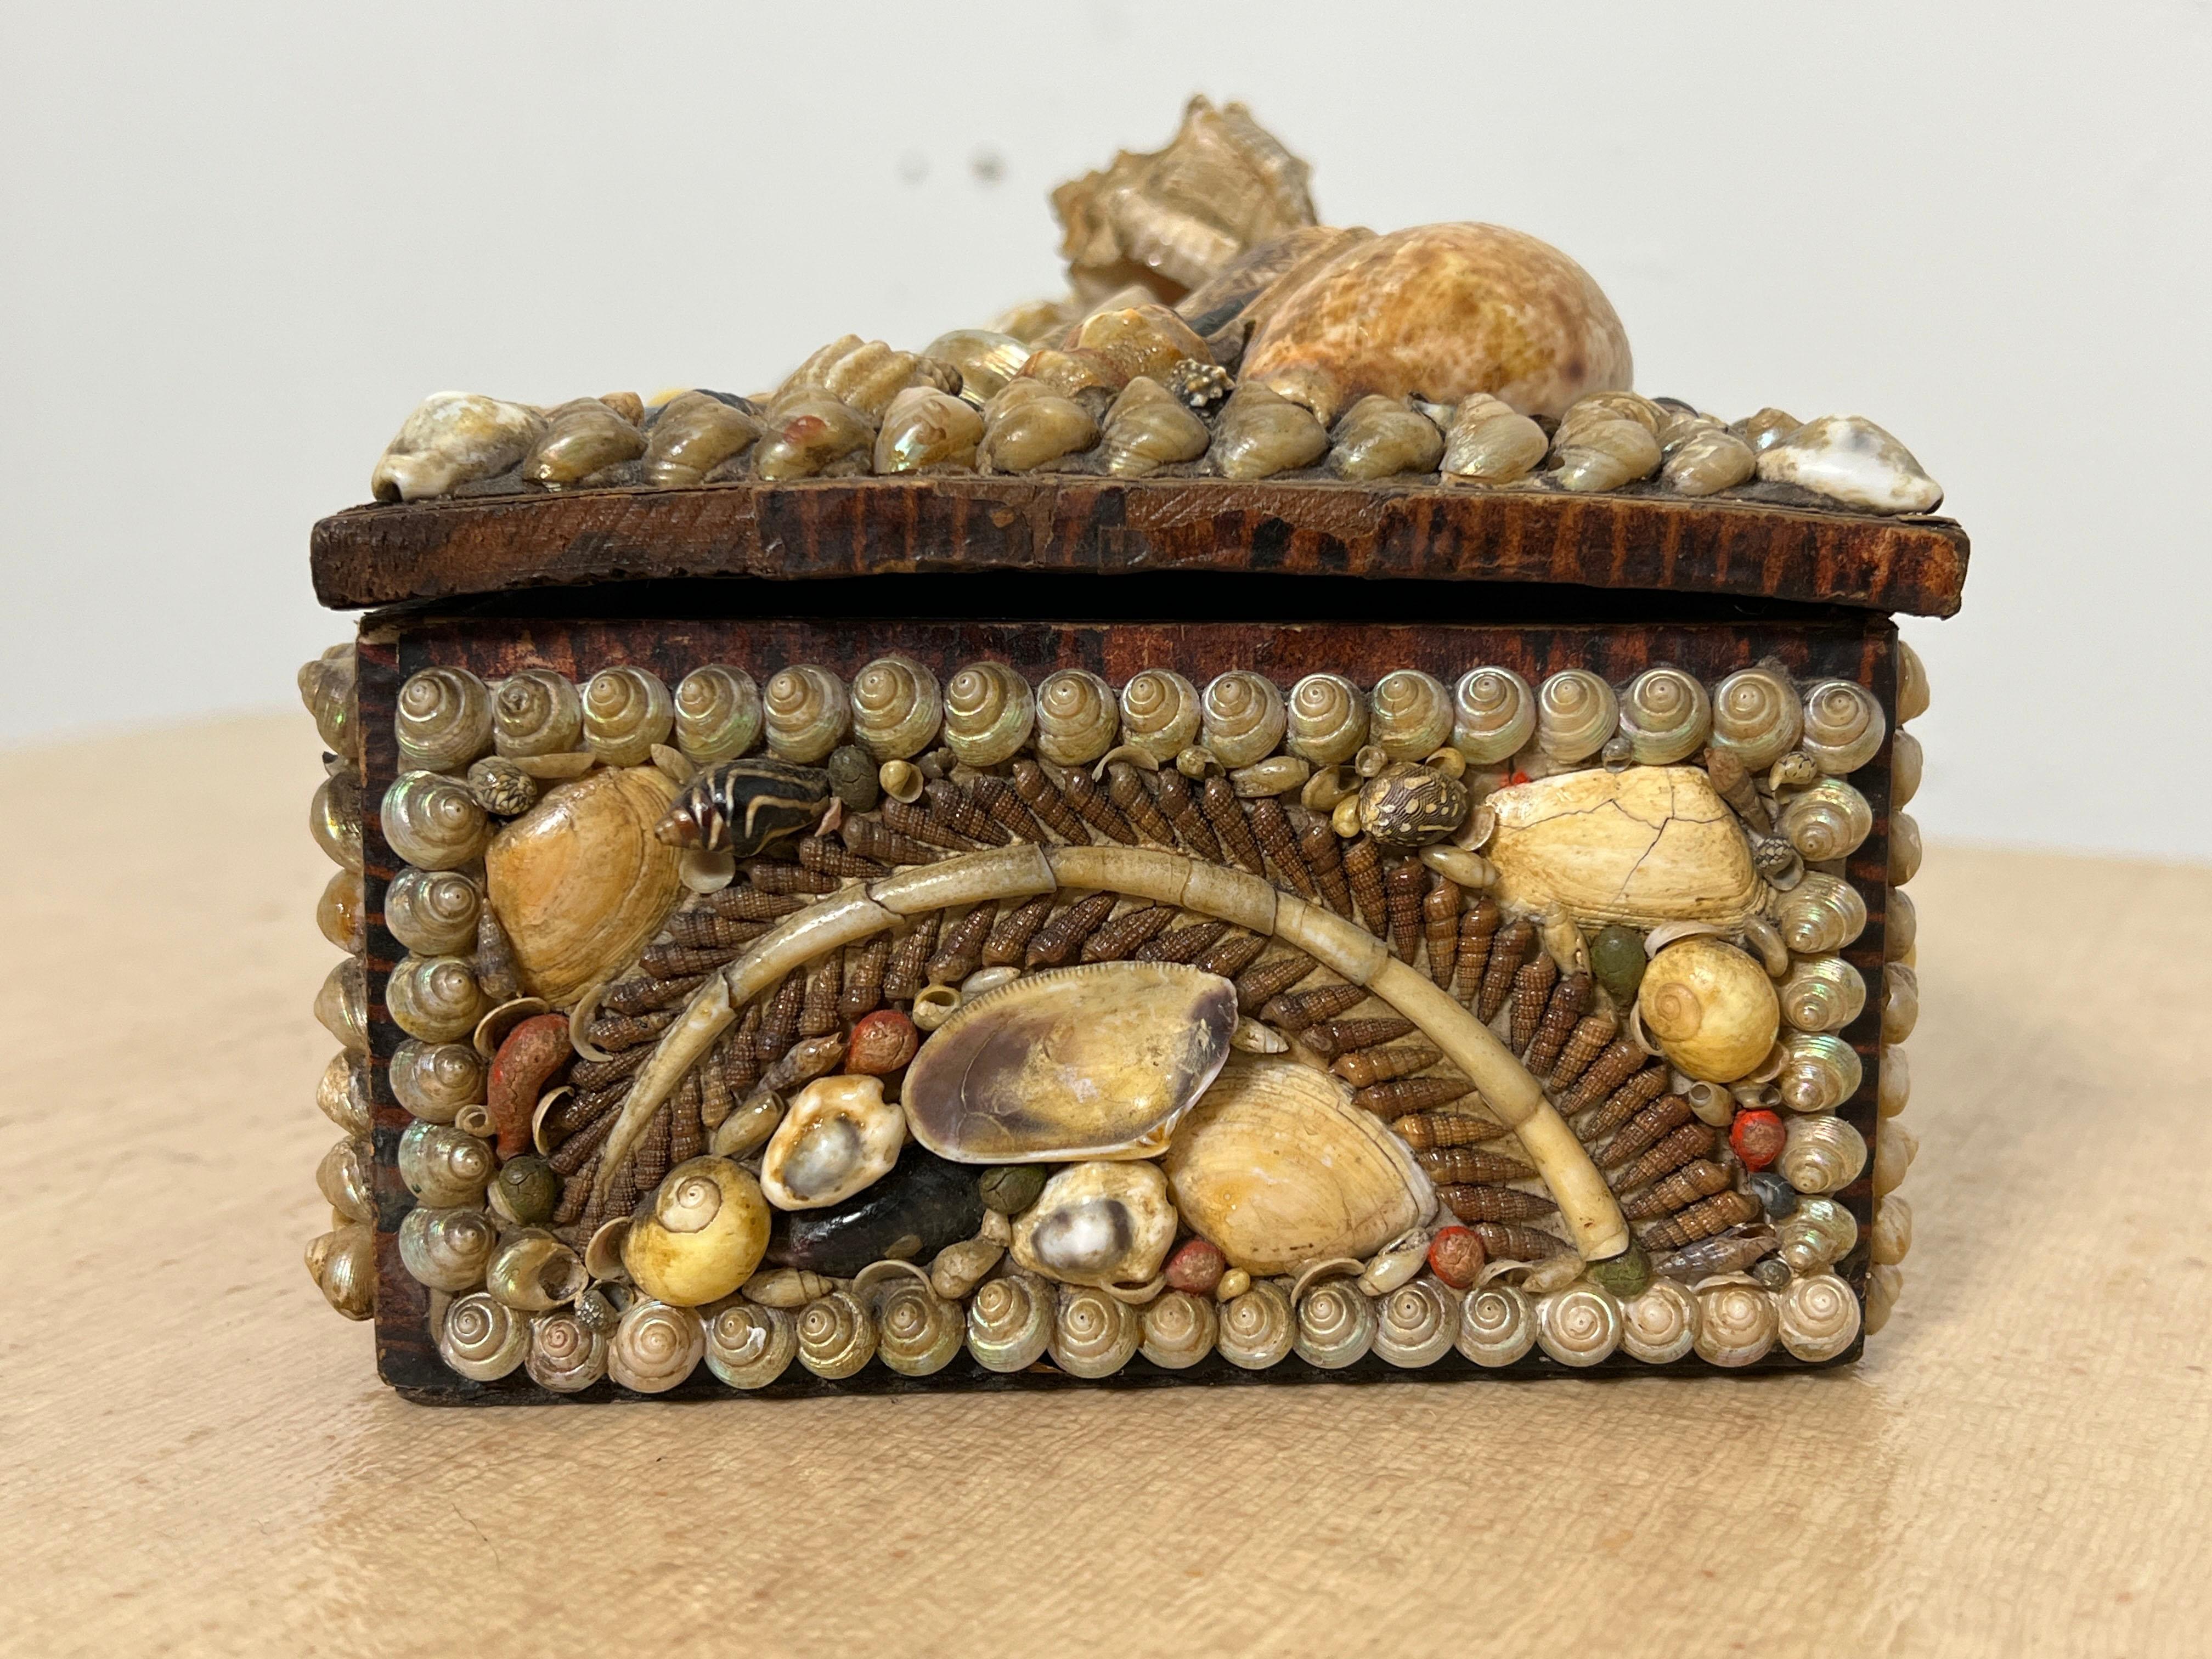 Shell Victorian Era Margate Grotto England Seashell and Painted Souvenir Trinket Box